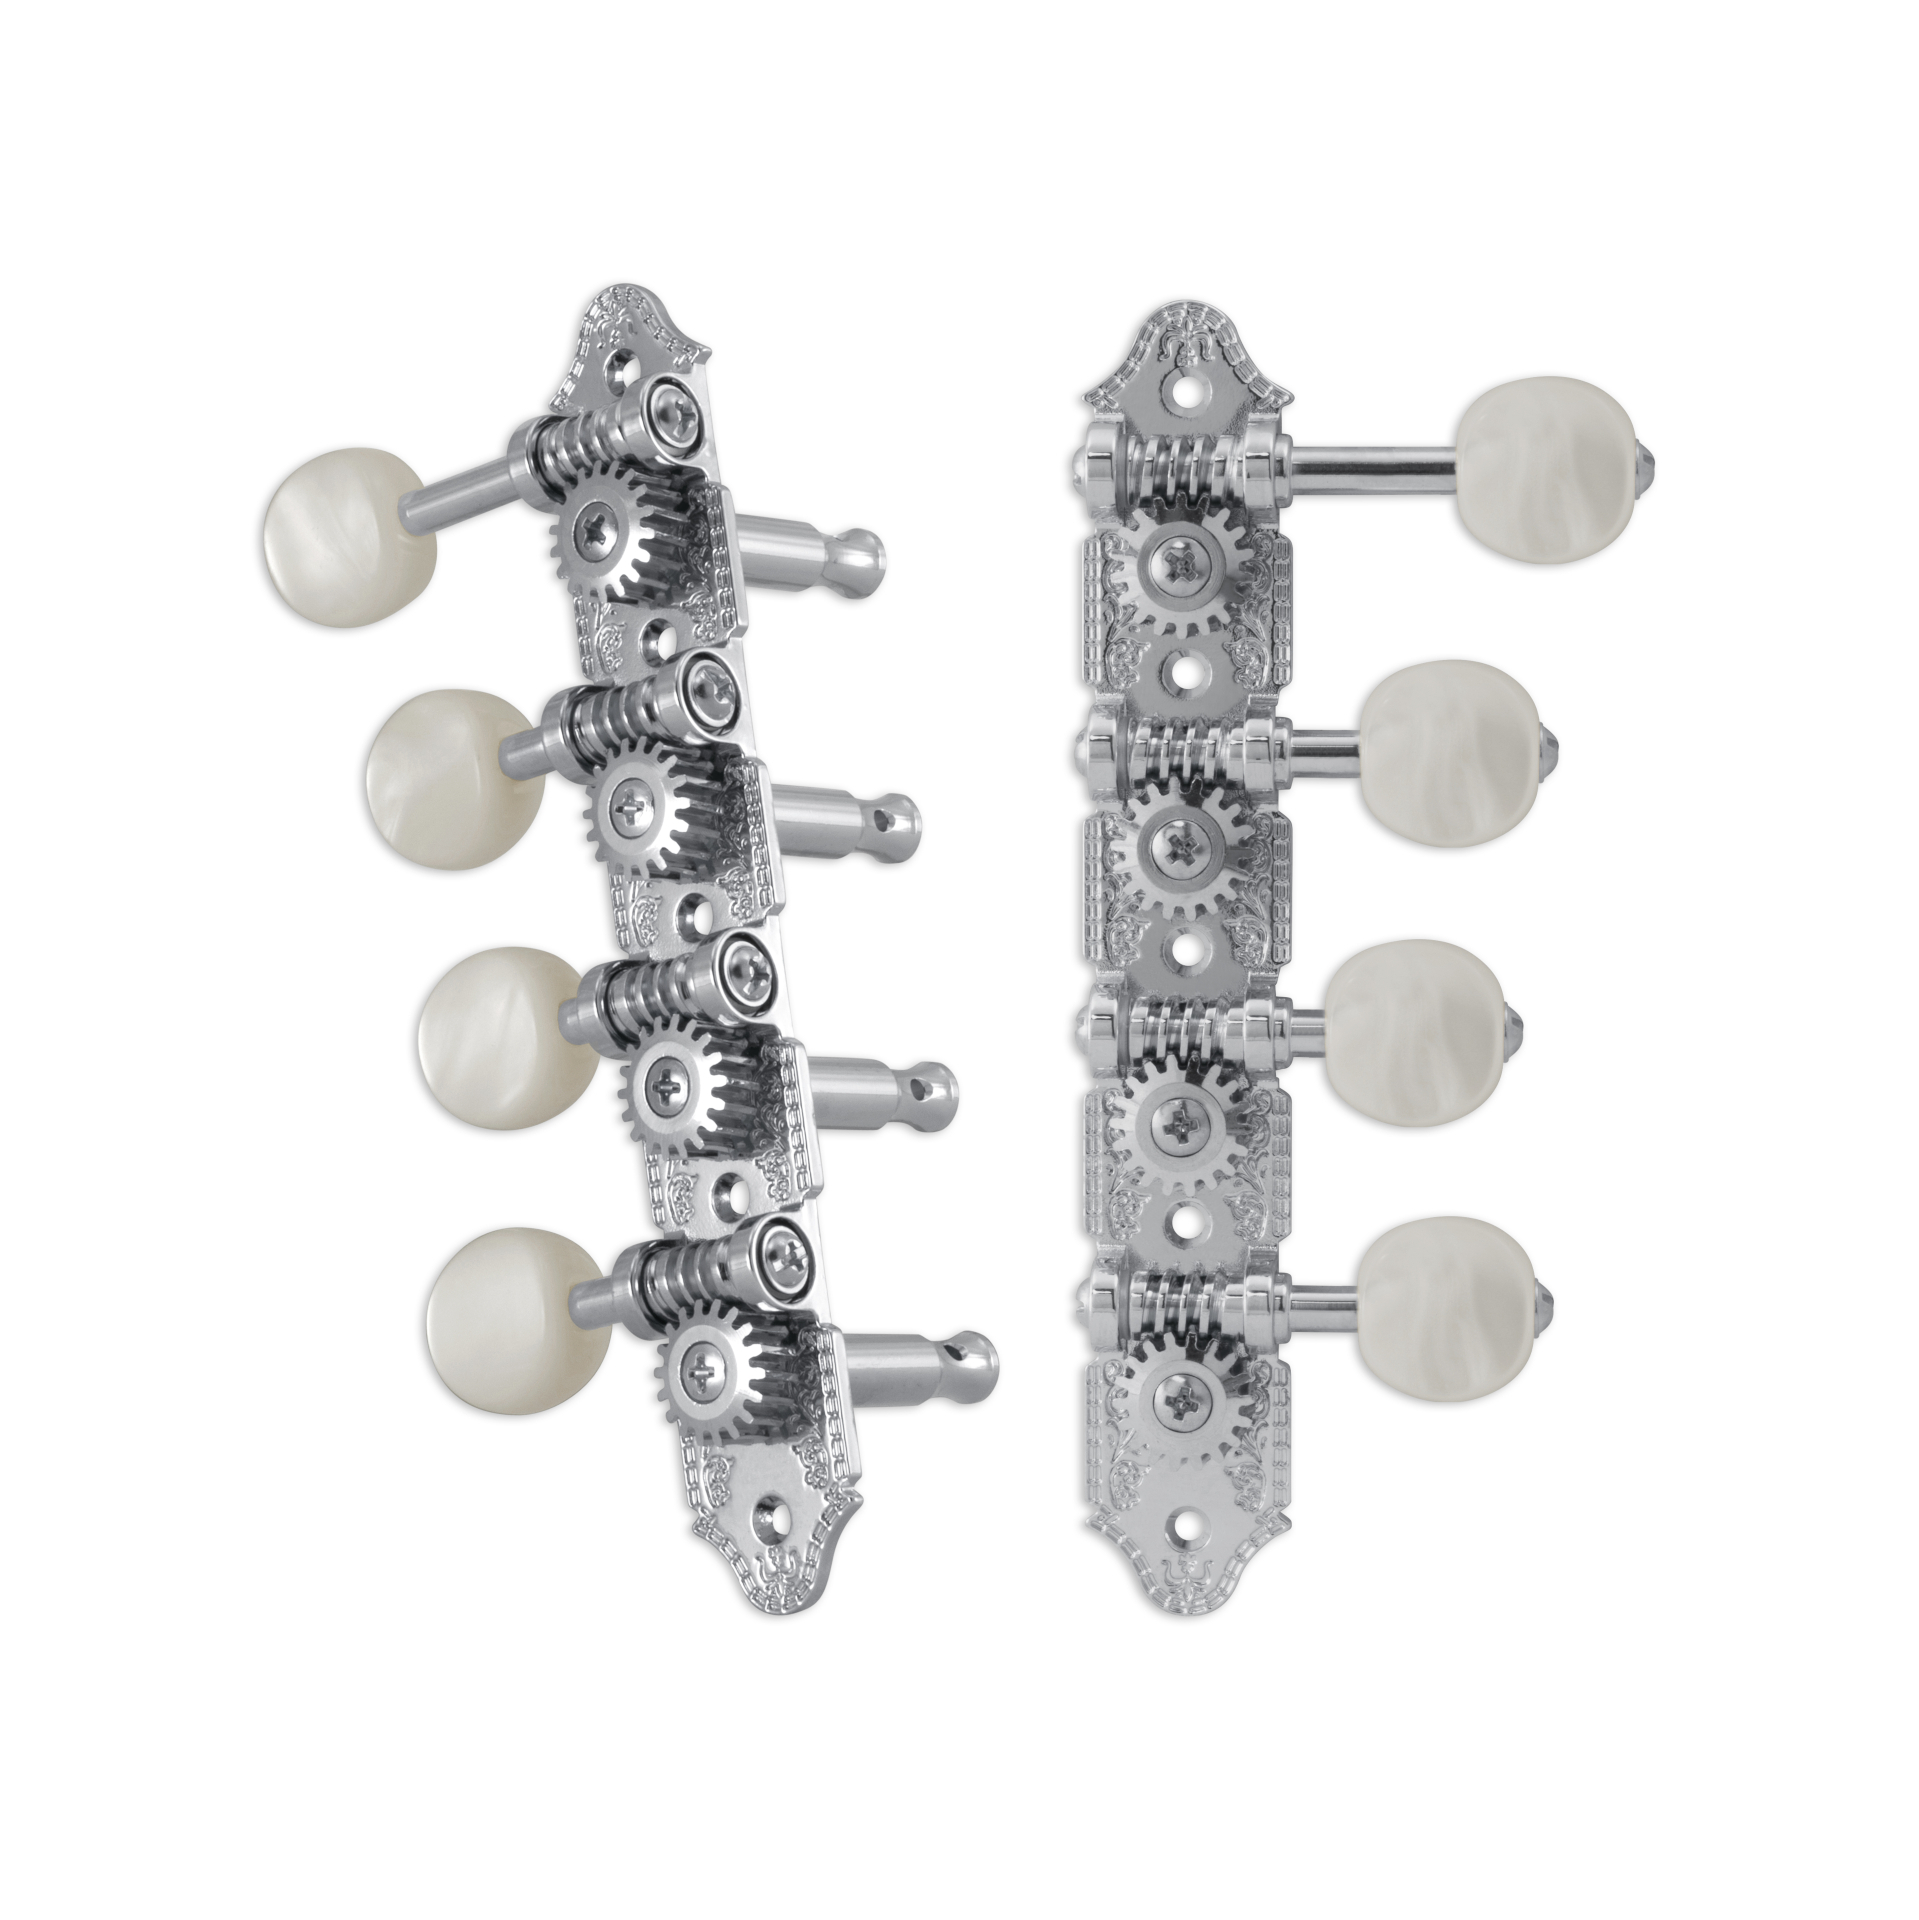 Grover 409FC Professional Mandolin Machines with Pearloid Button - Mandolin Machine Heads, Standard 4 + 4, for "F"-Style Mandolins - Chrome